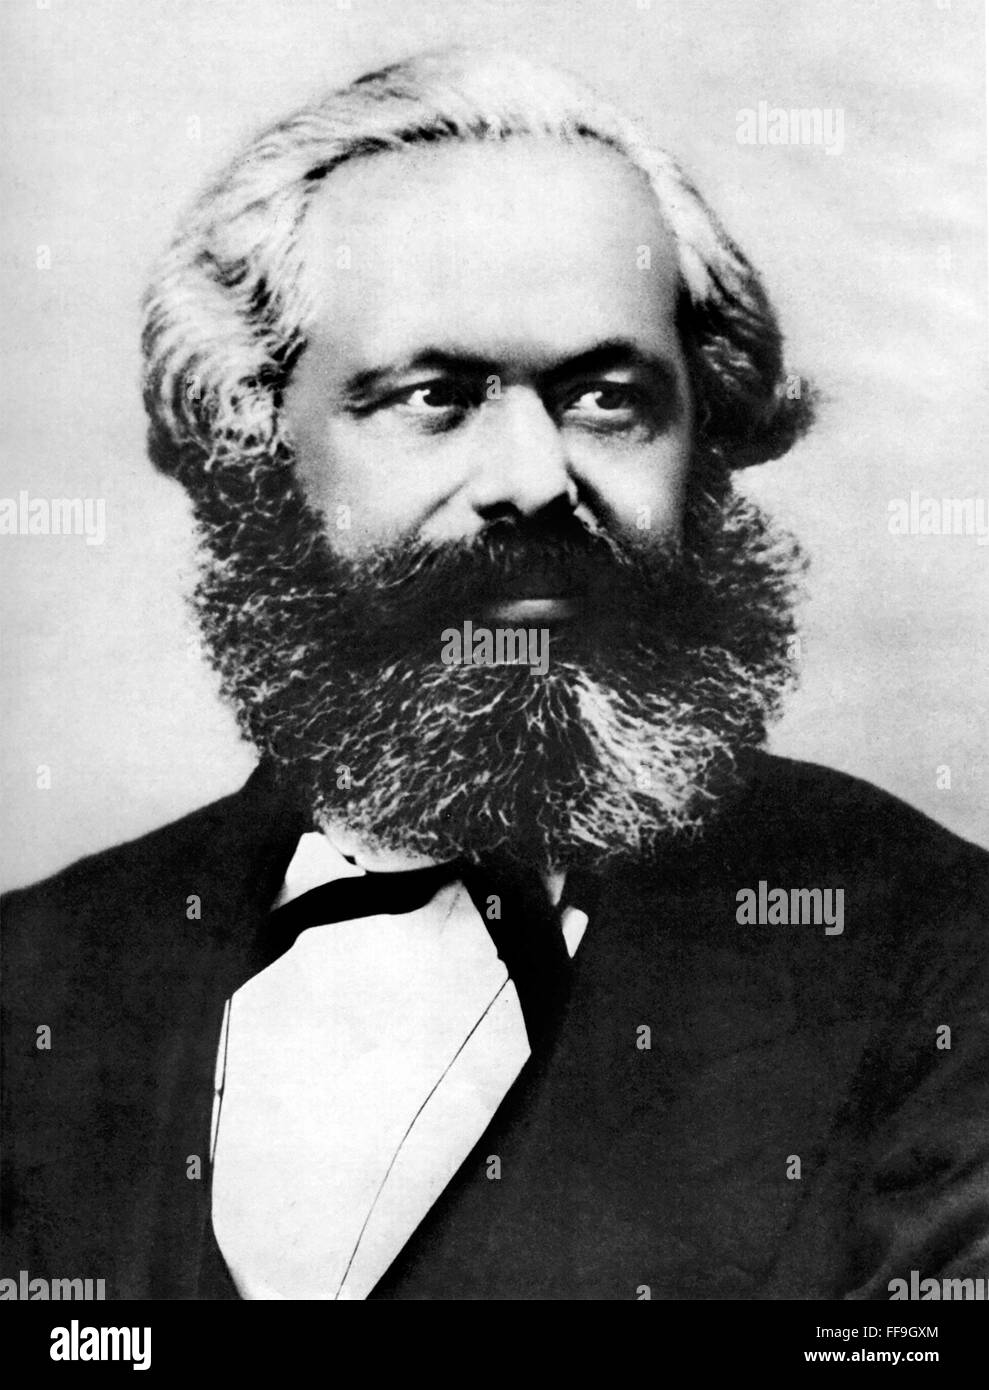 Karl Marx, the German born socialist philosopher, economist and writer. Photo c.1867 Stock Photo